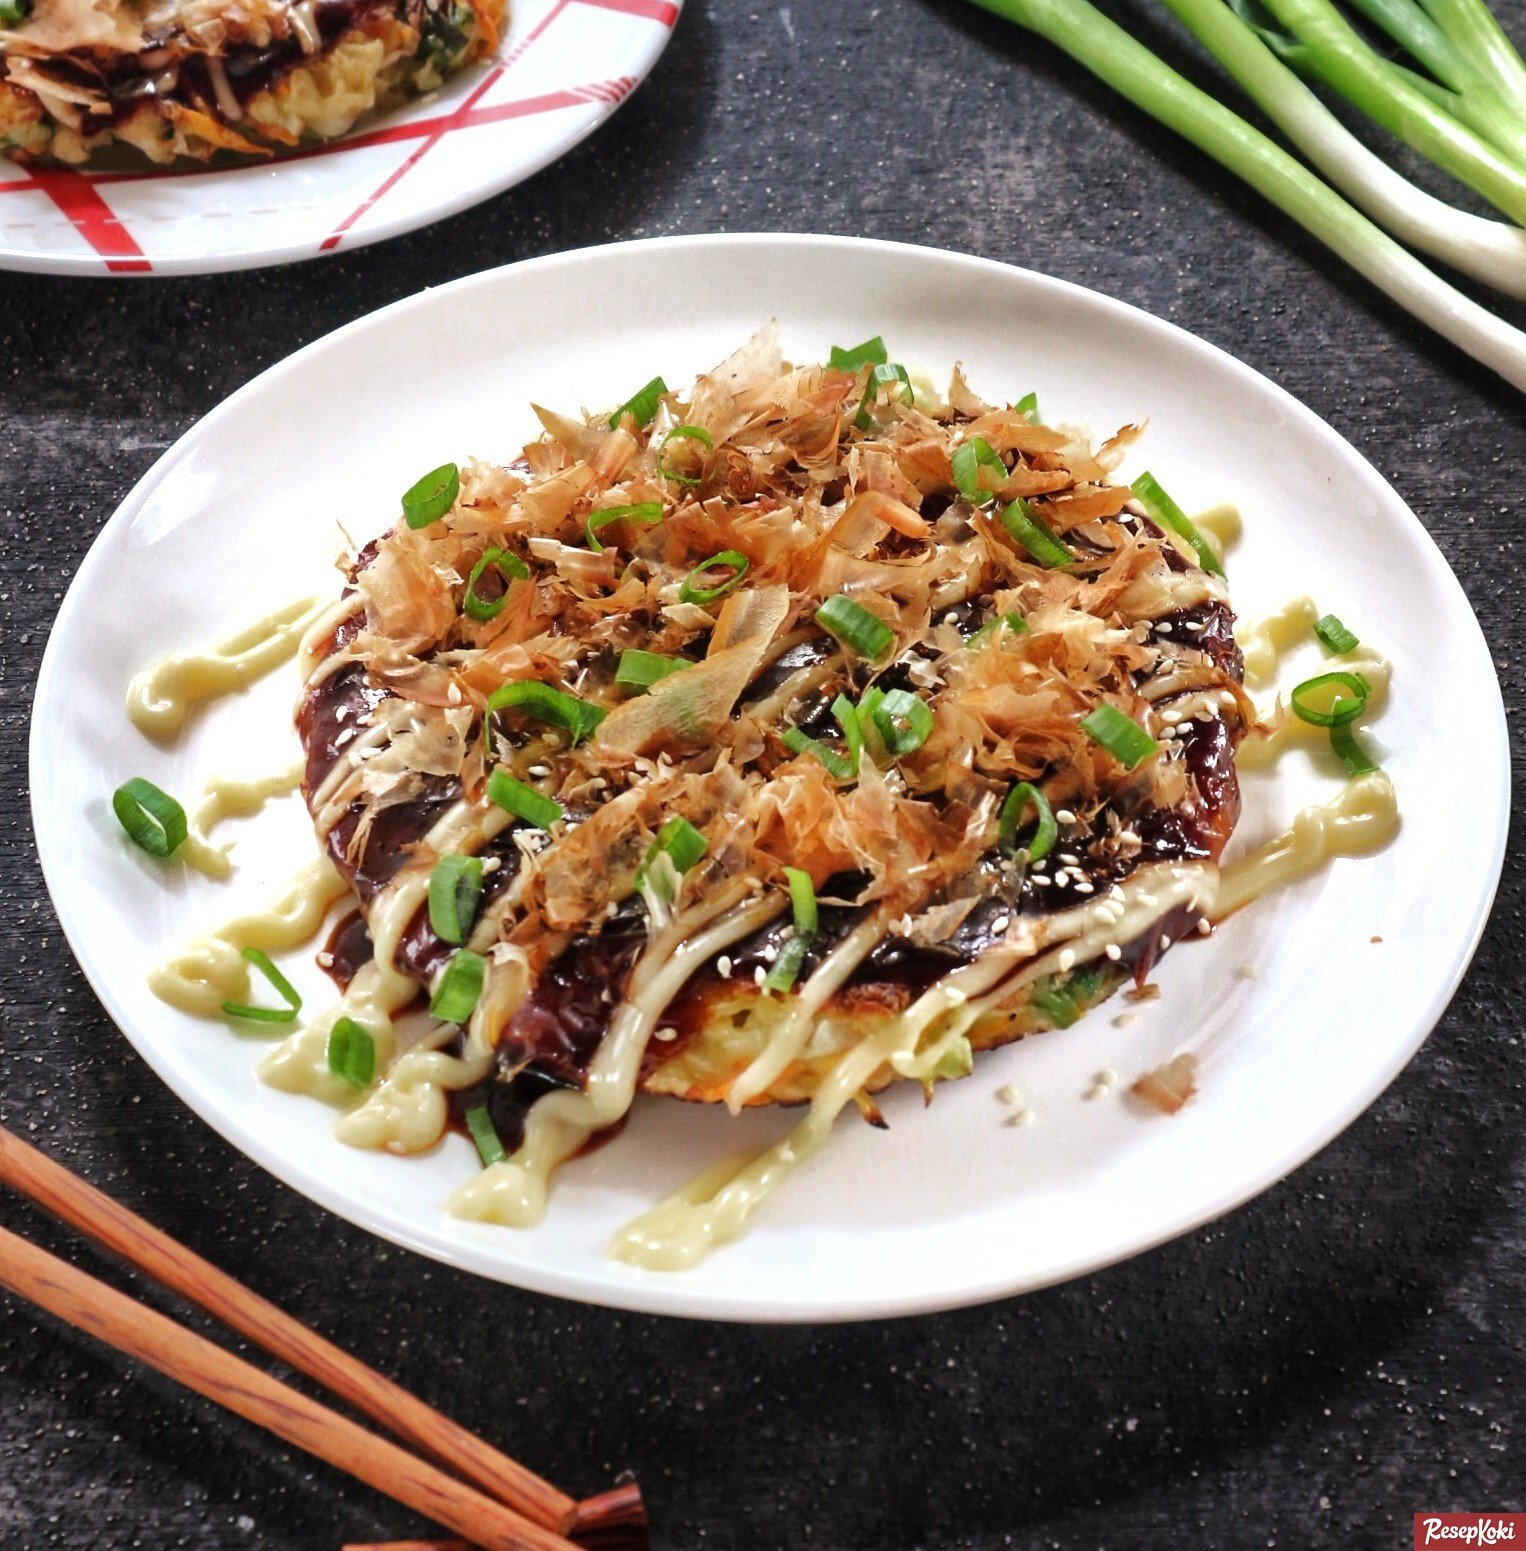  Okonomiyaki  Jepang  Enak Mudah Dibuat Resep ResepKoki